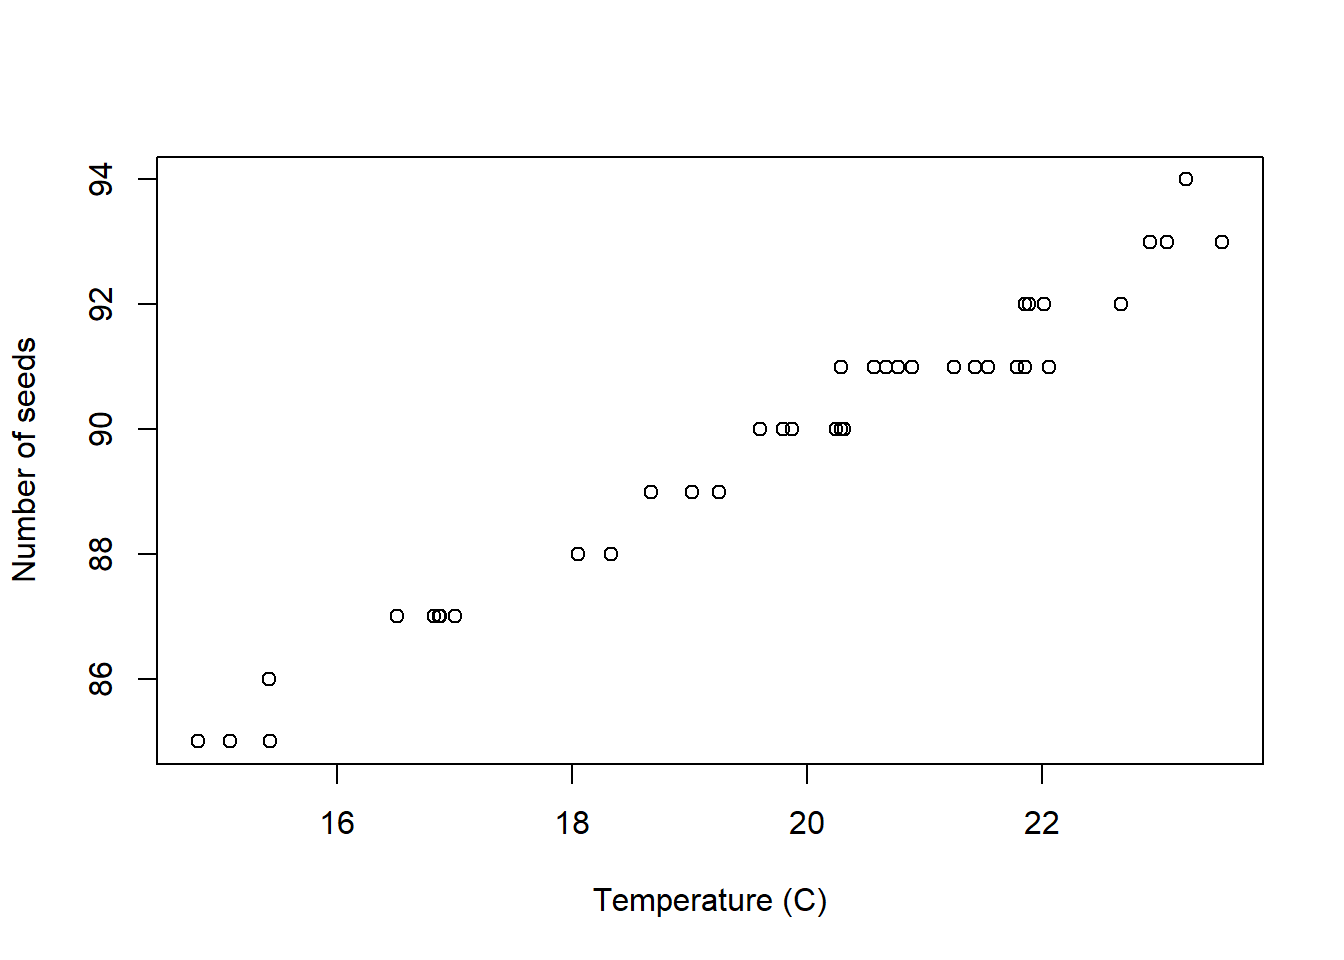 Scatter plot of number of seeds versus average temperature (40 observations)